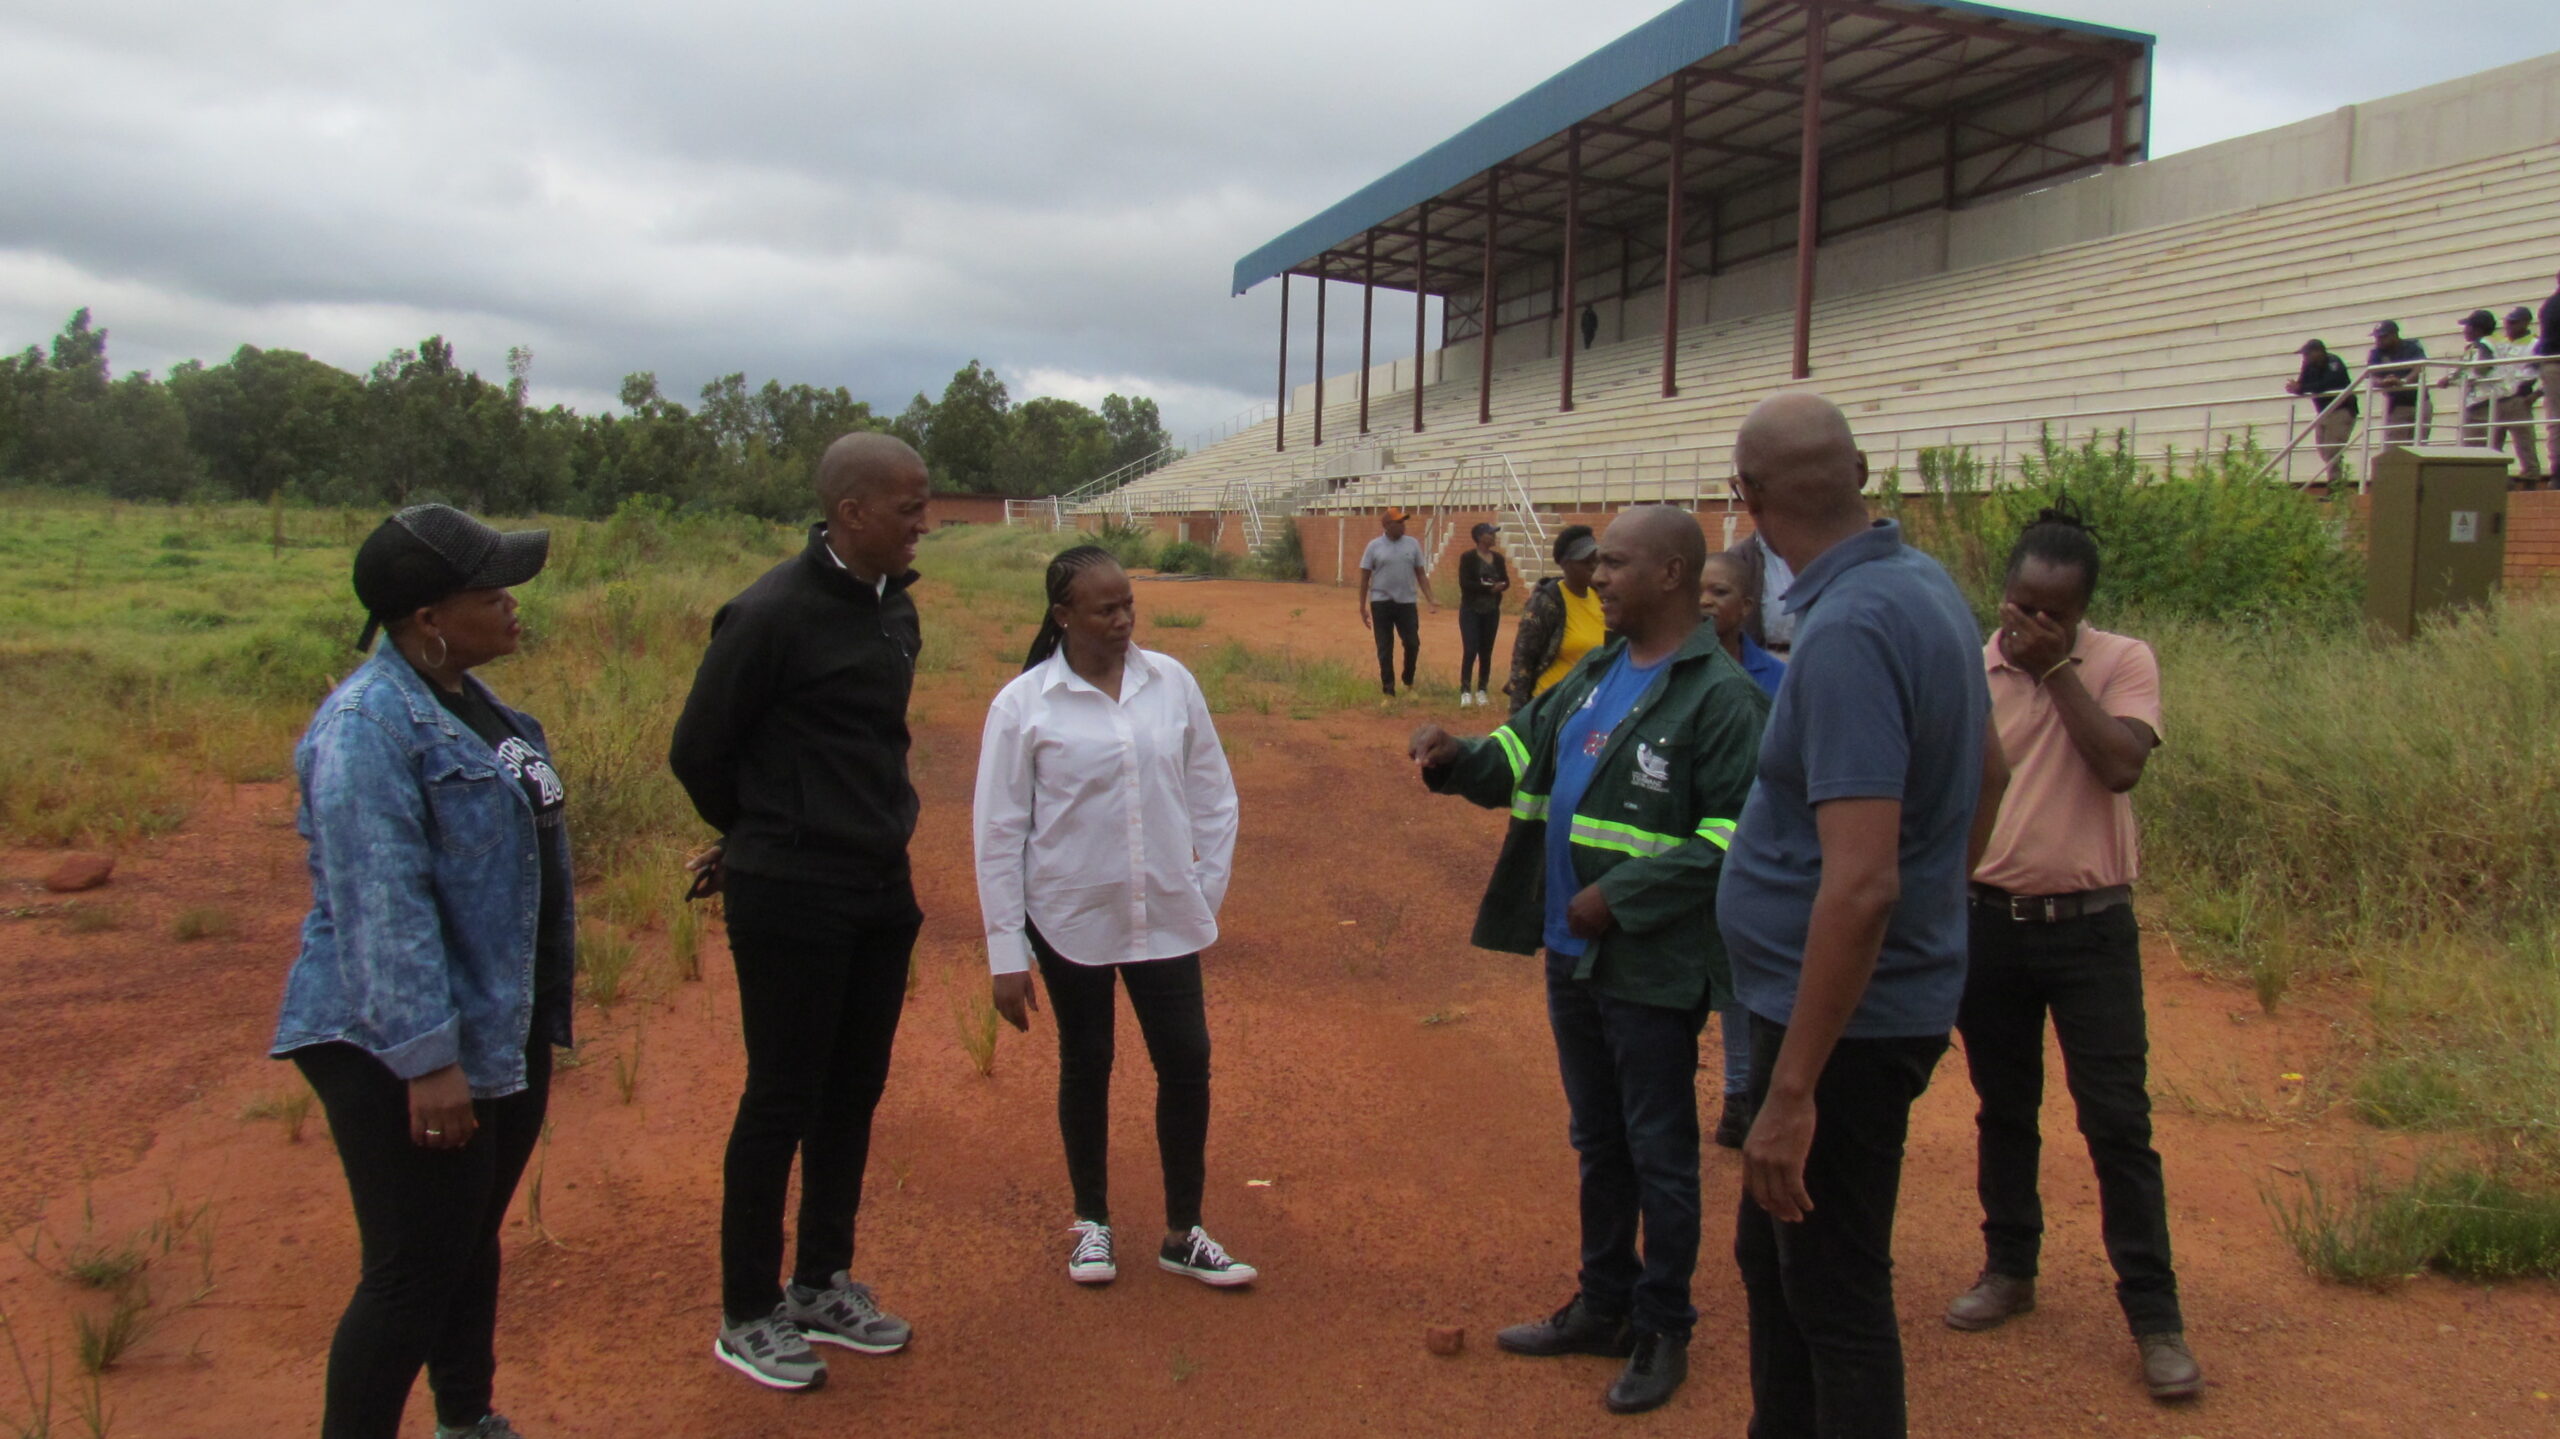 Deputy mayor Nasiphi Mayo conducted an oversight inspection visit at the Refilwe stadium in Cullinan, Tshwane photo by Dimakatso Modipa